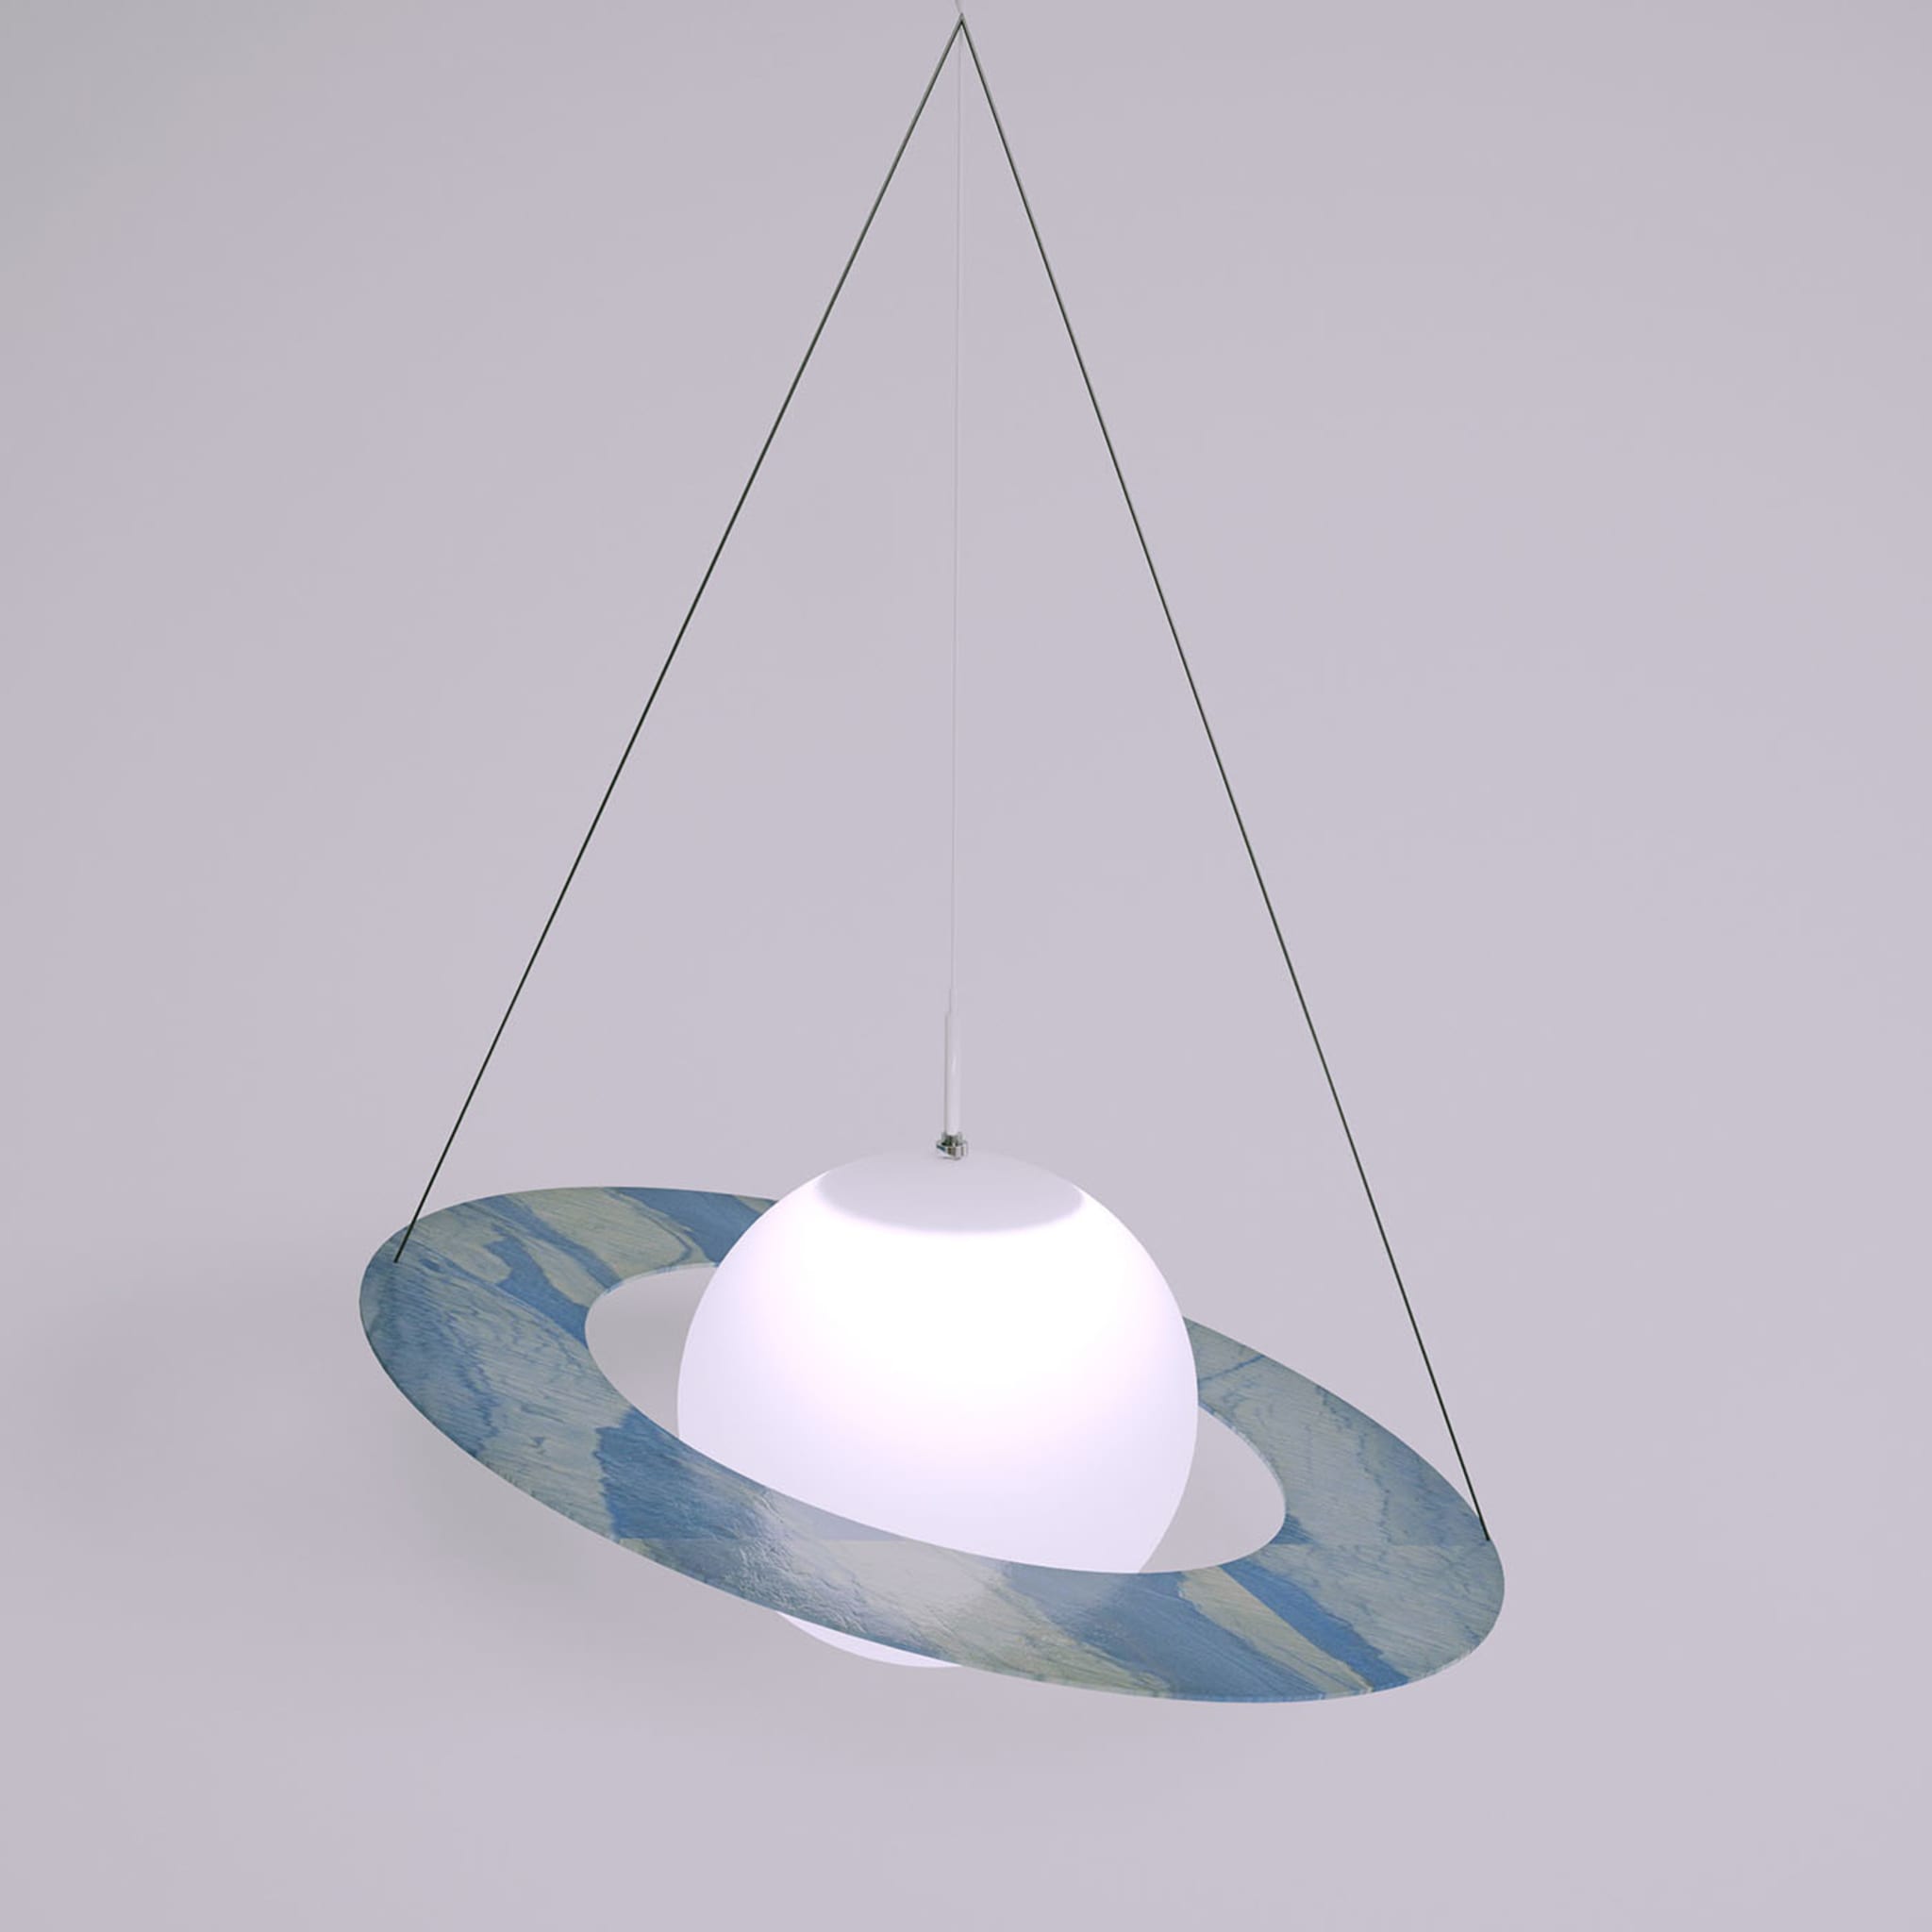 Planet Azul Macaubas Pendant Lamp by Sid&sign - Alternative view 1